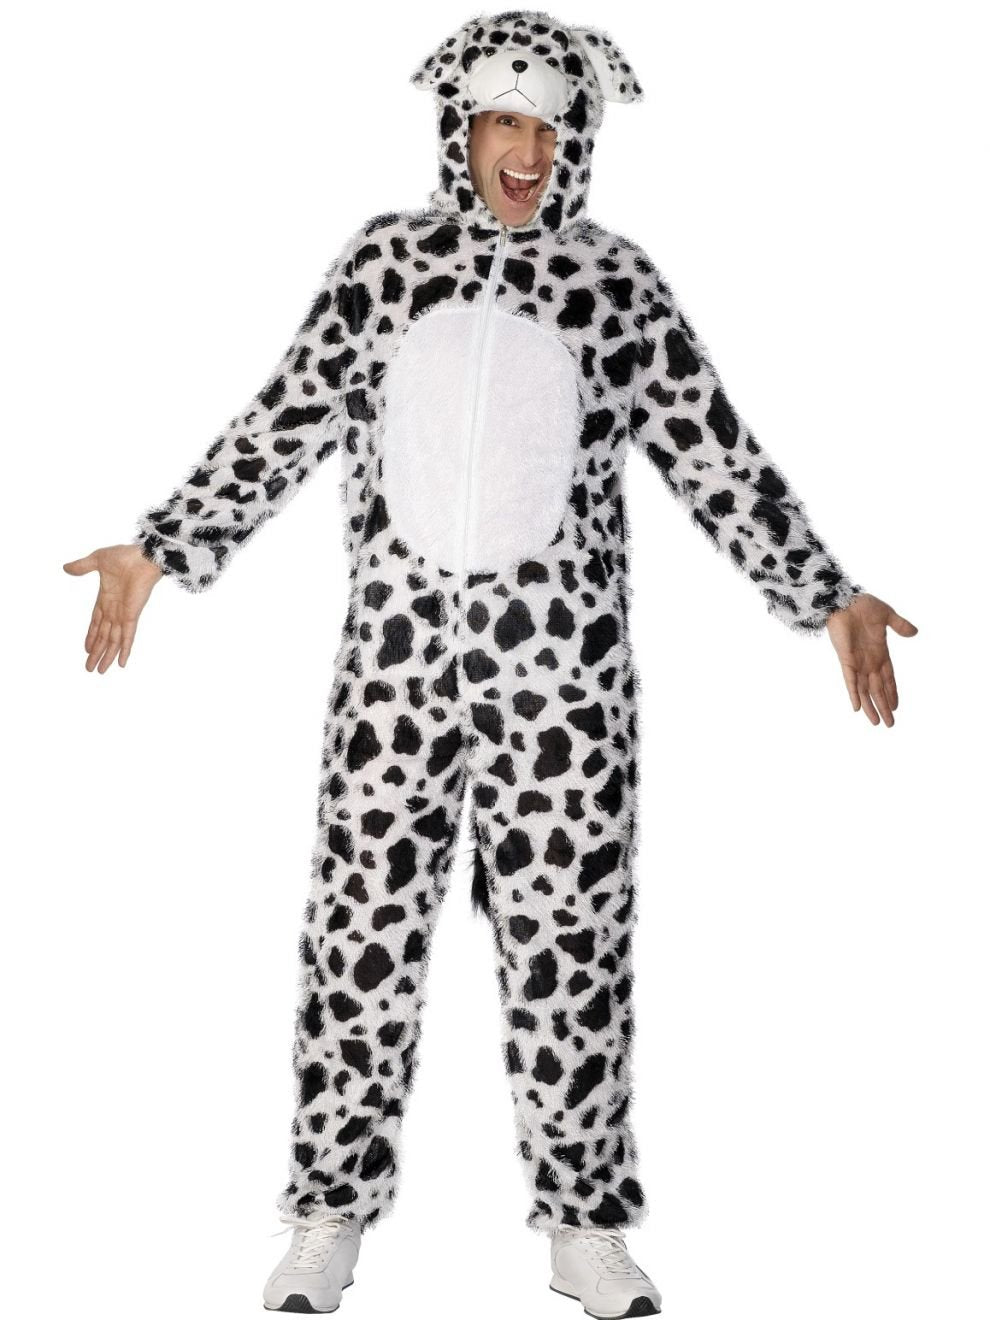 Costume Adult Animal Dalmatian Dog Medium